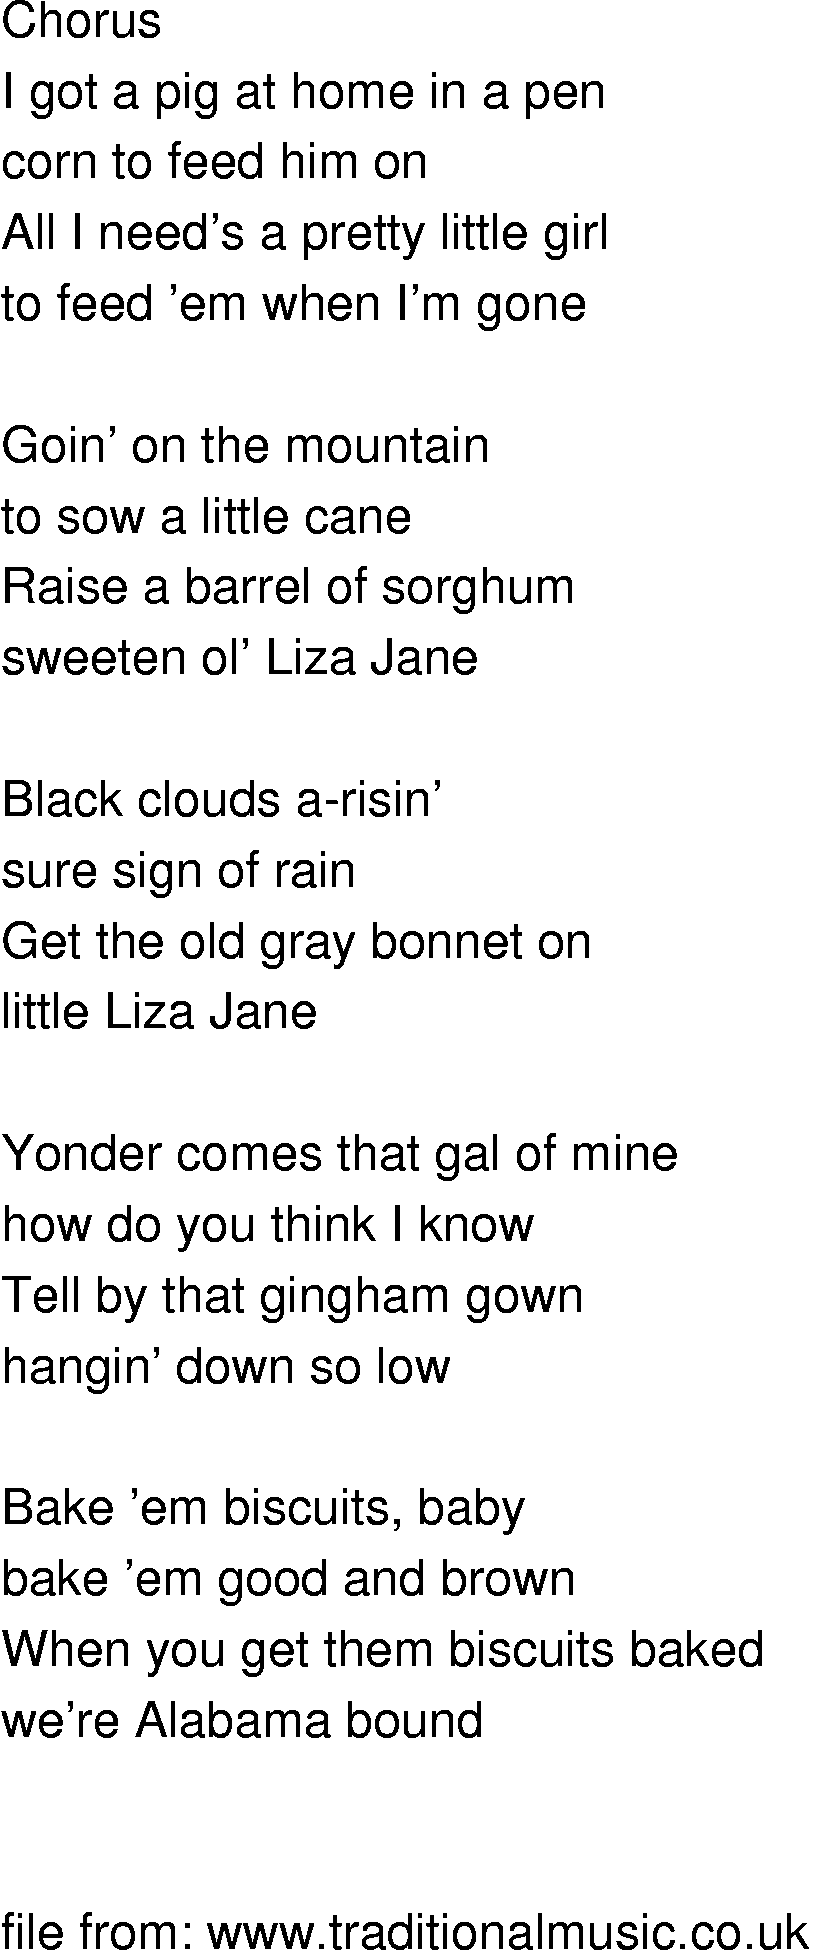 Old-Time (oldtimey) Song Lyrics - pig in a pen